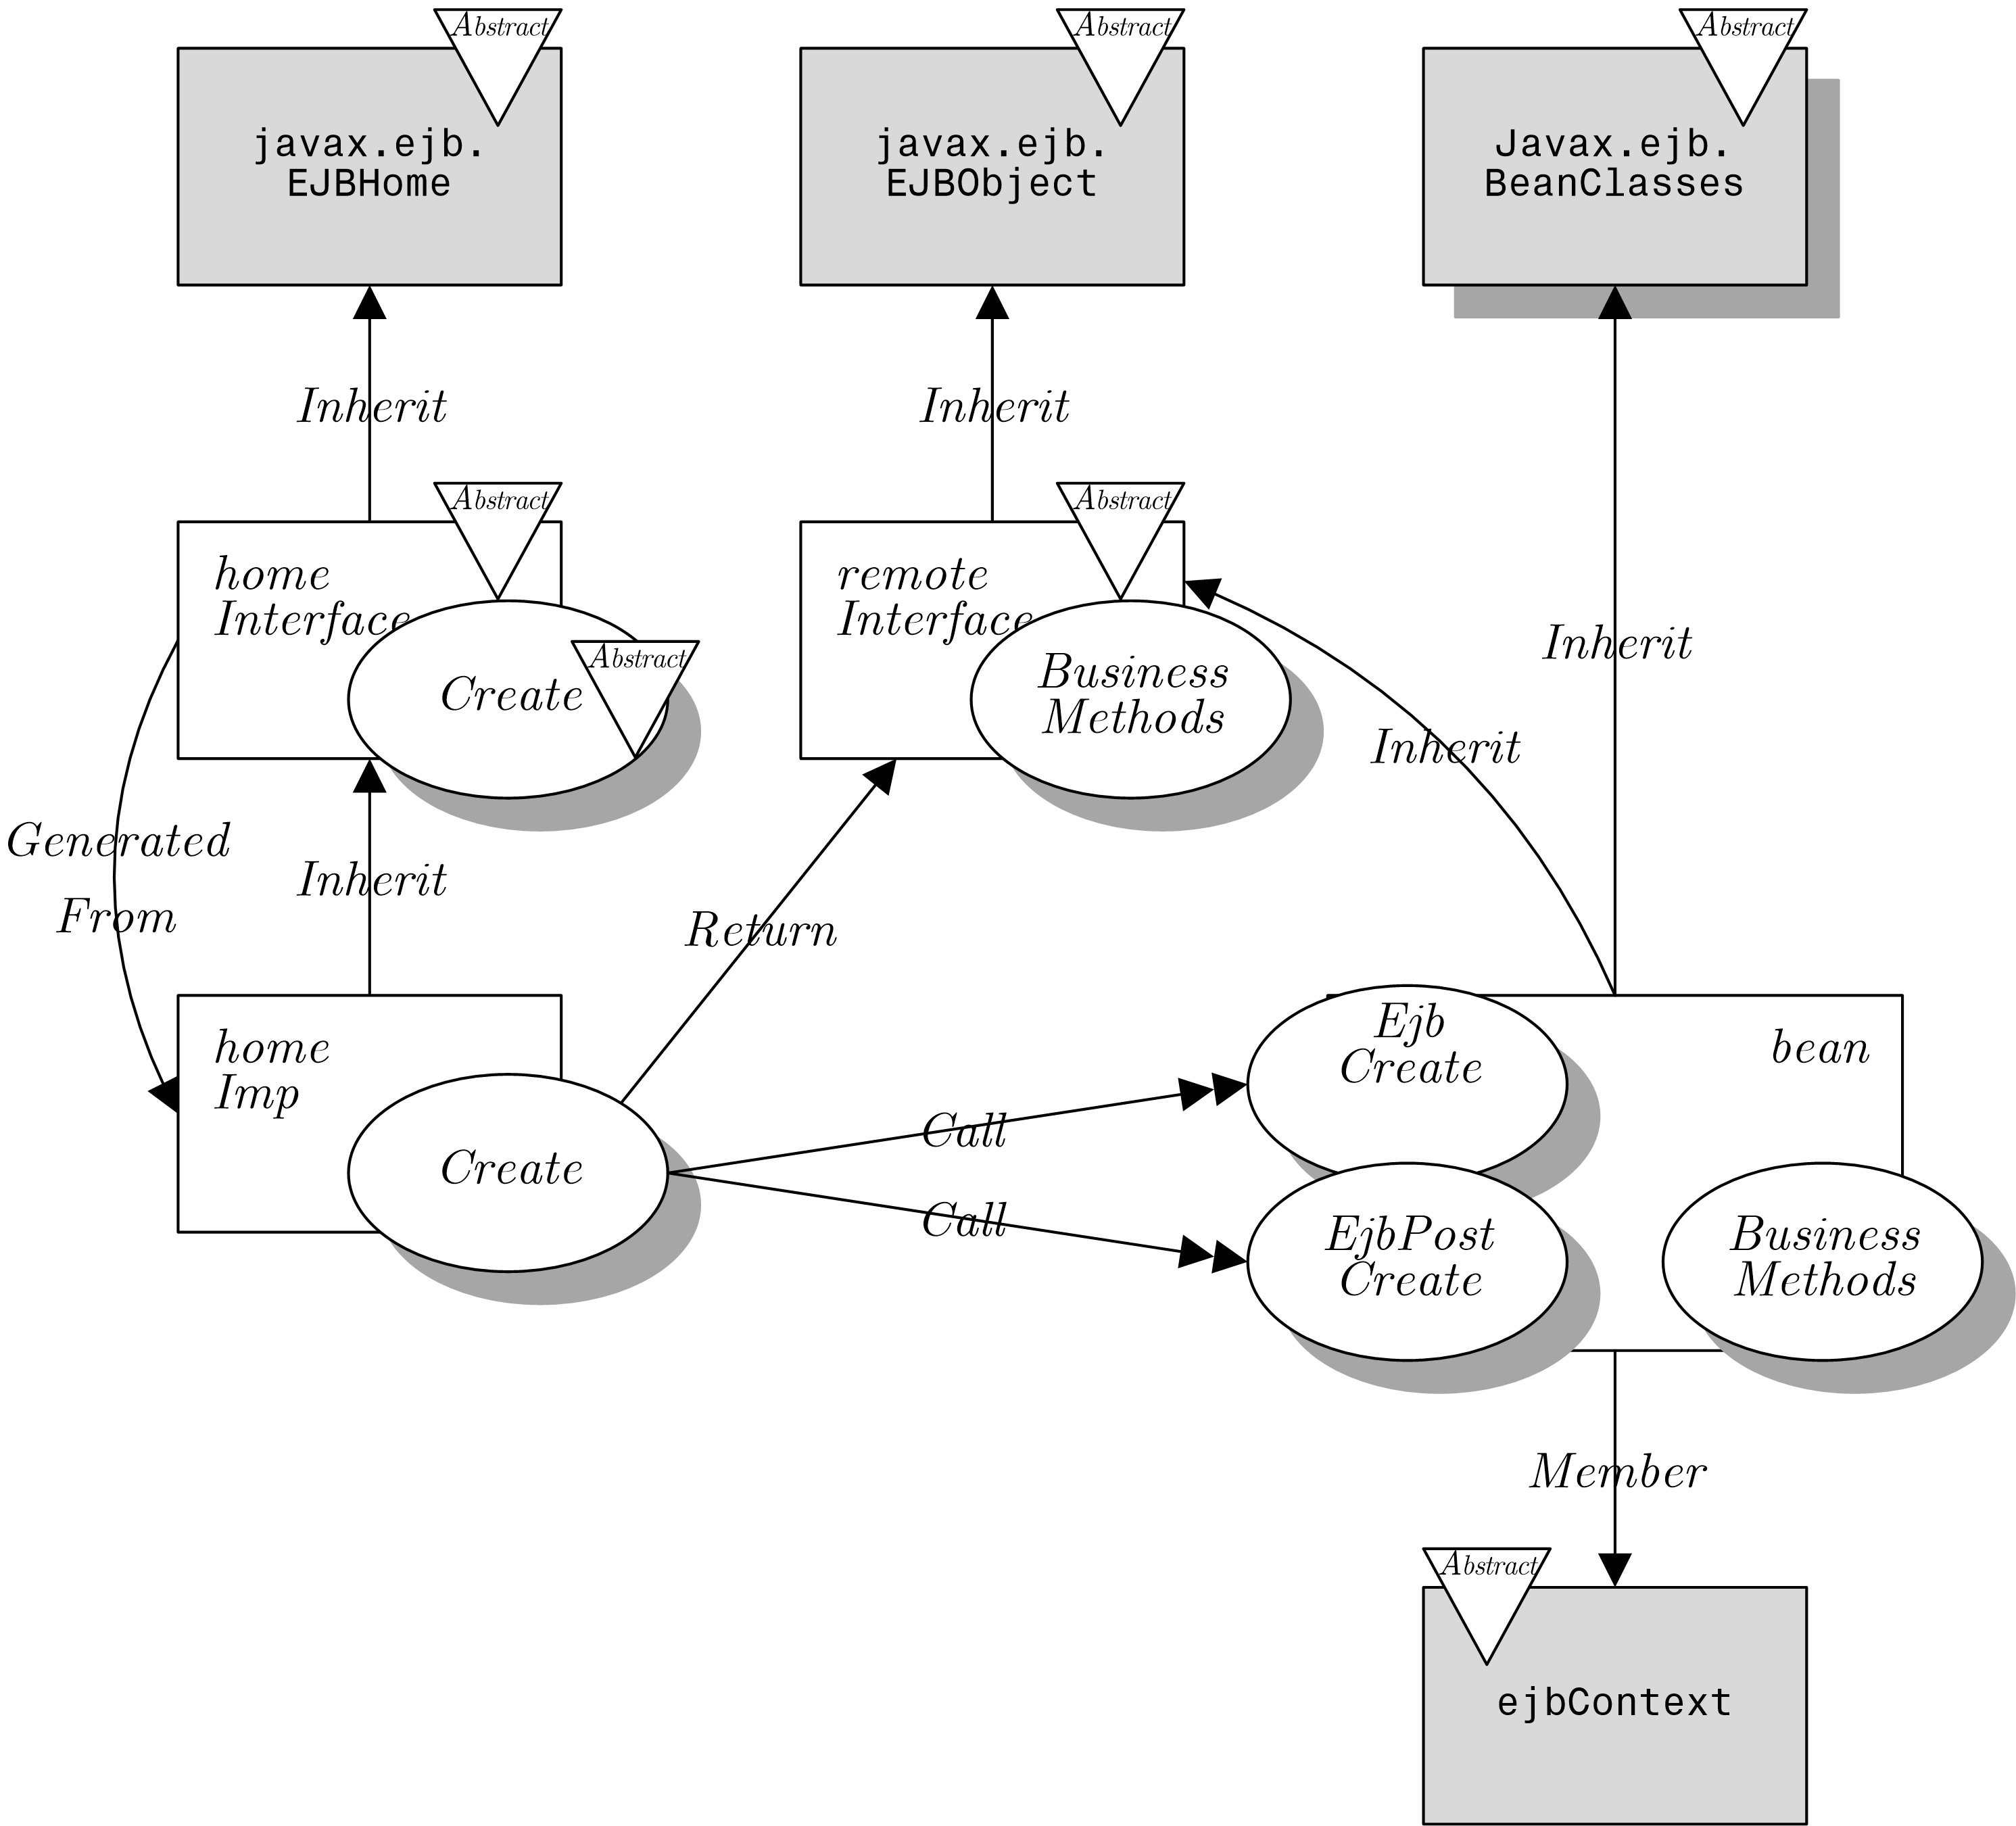 Codechart of the Enterprise JavaBeans framework